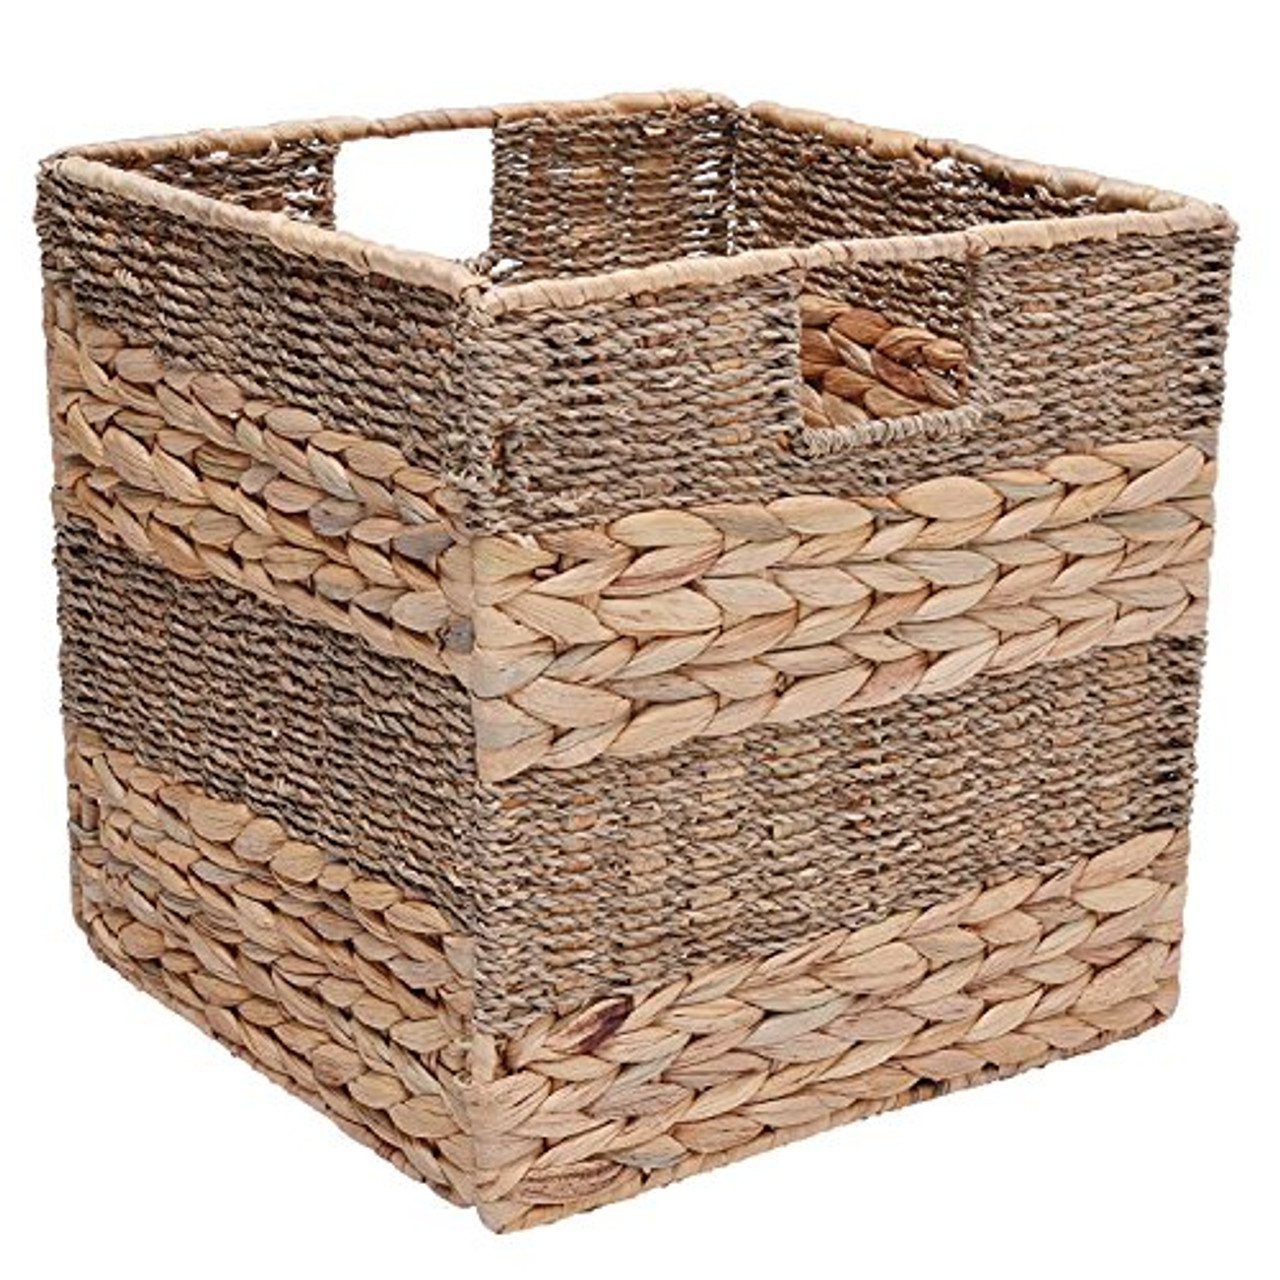 lined wicker storage baskets